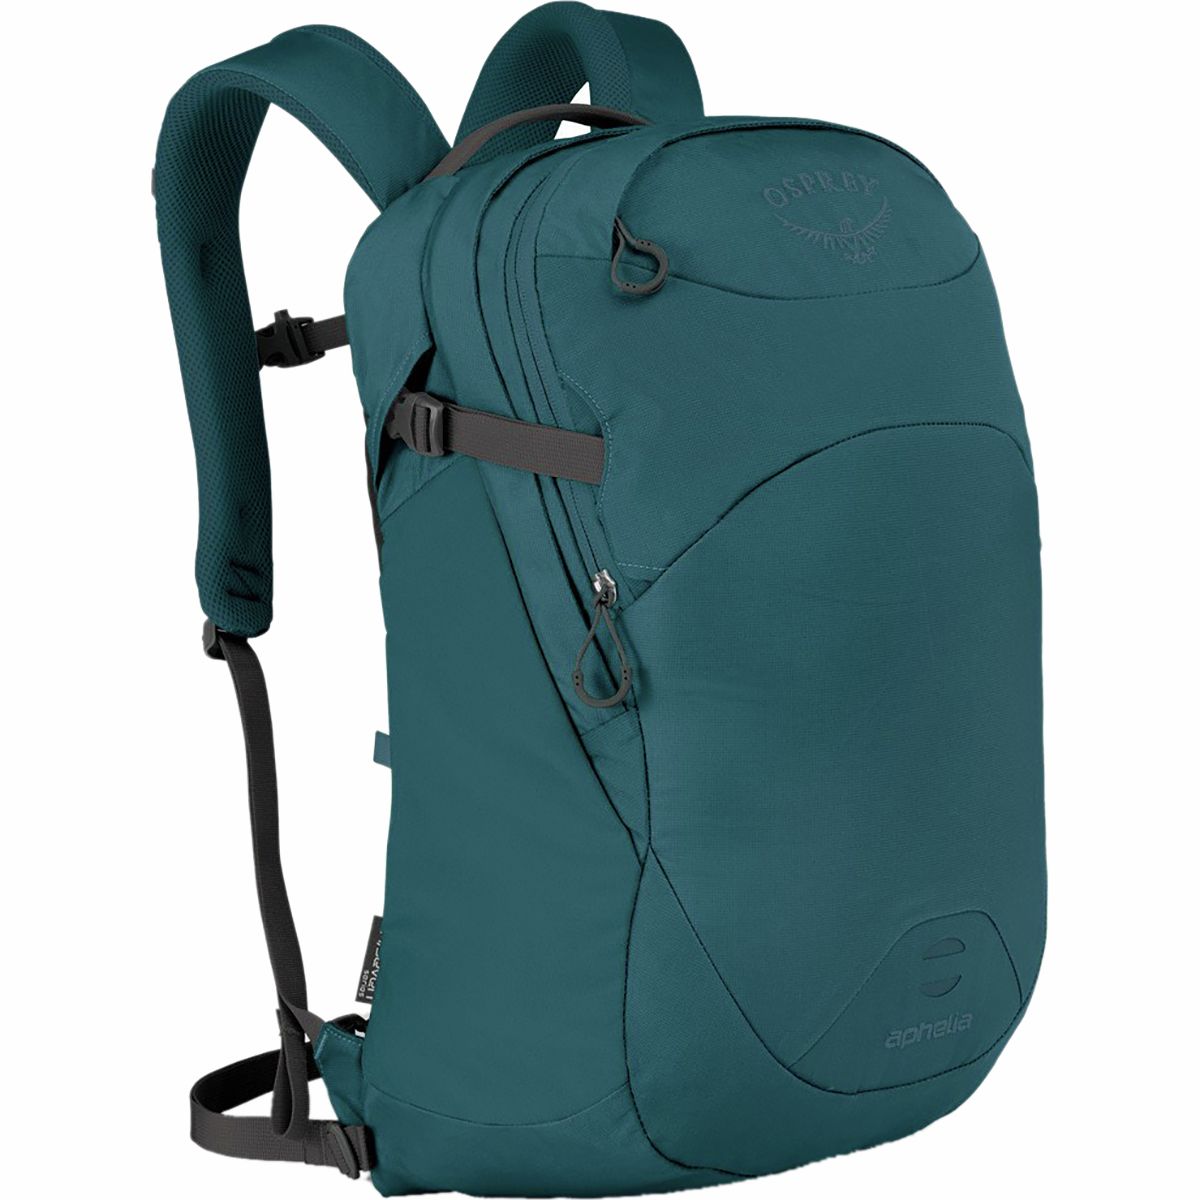 Osprey Packs Aphelia 26L Backpack - Women's